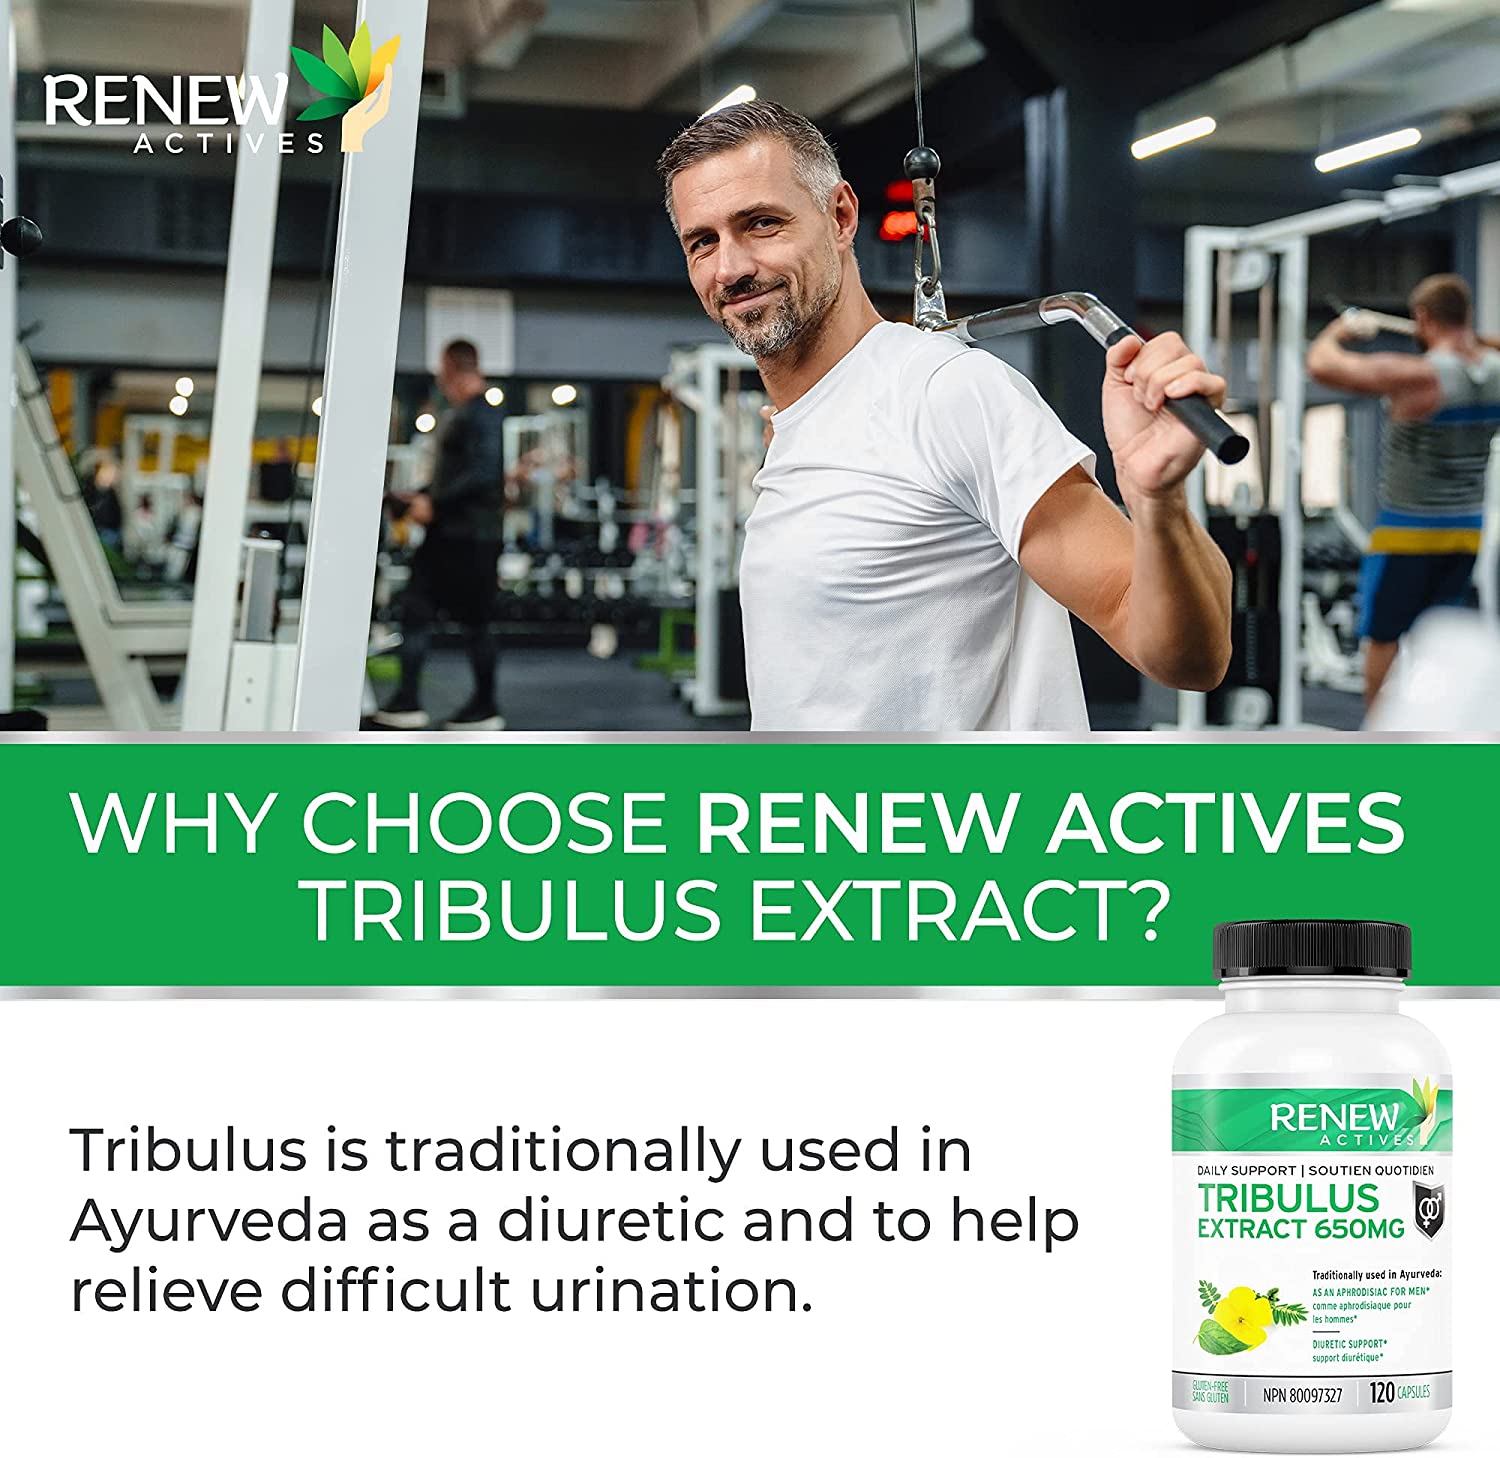 Renew Actives Tribulus Terrestris Extract: 1300mg Tribulus Powder Supplement with 45% Saponins